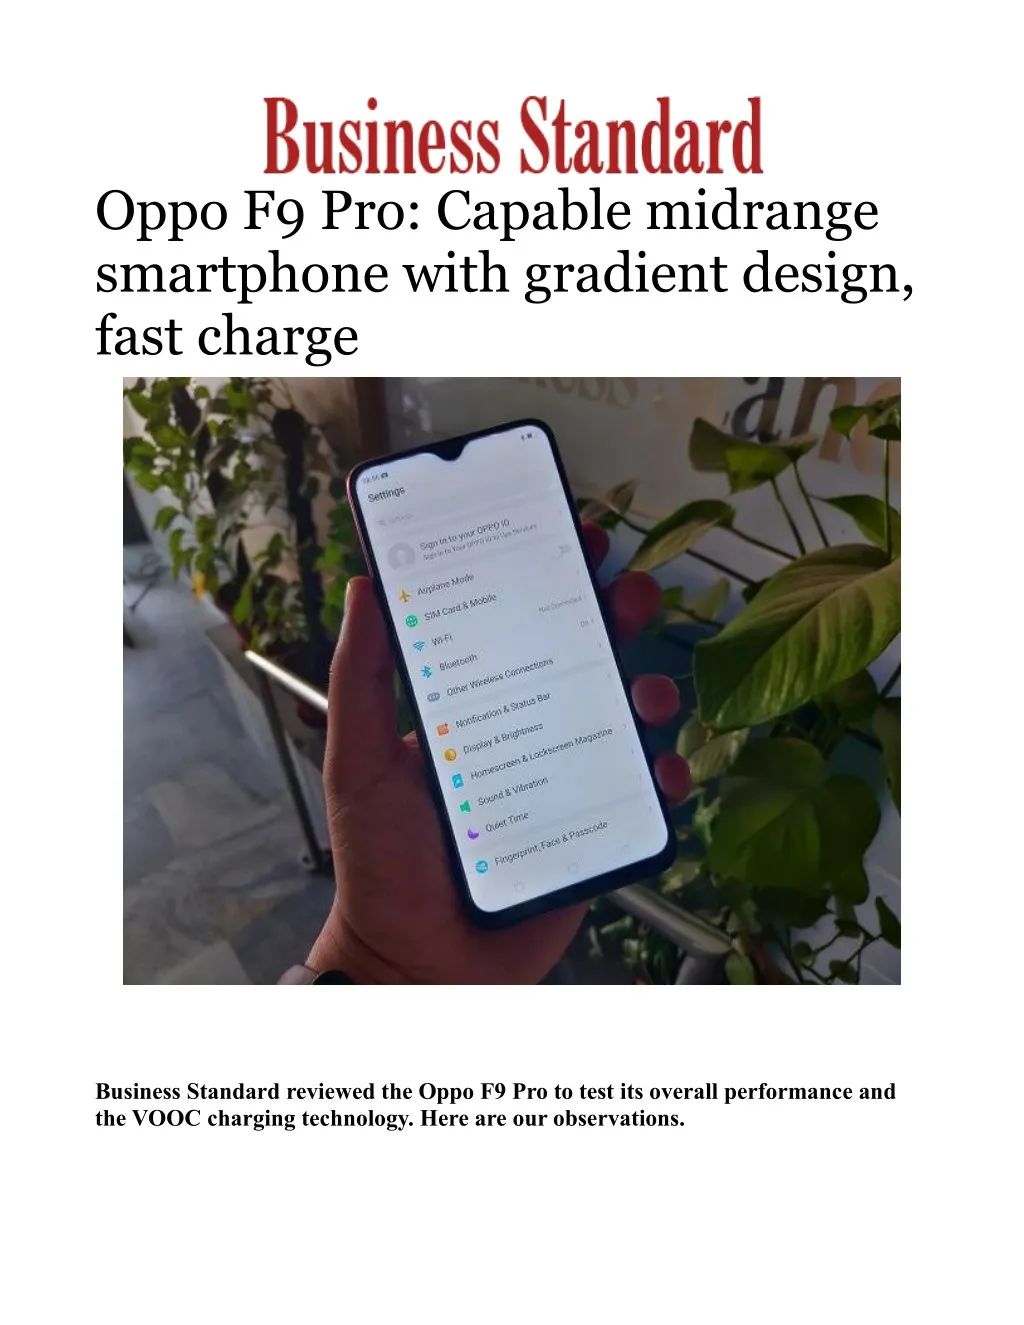 oppo f9 pro capable midrange smartphone with